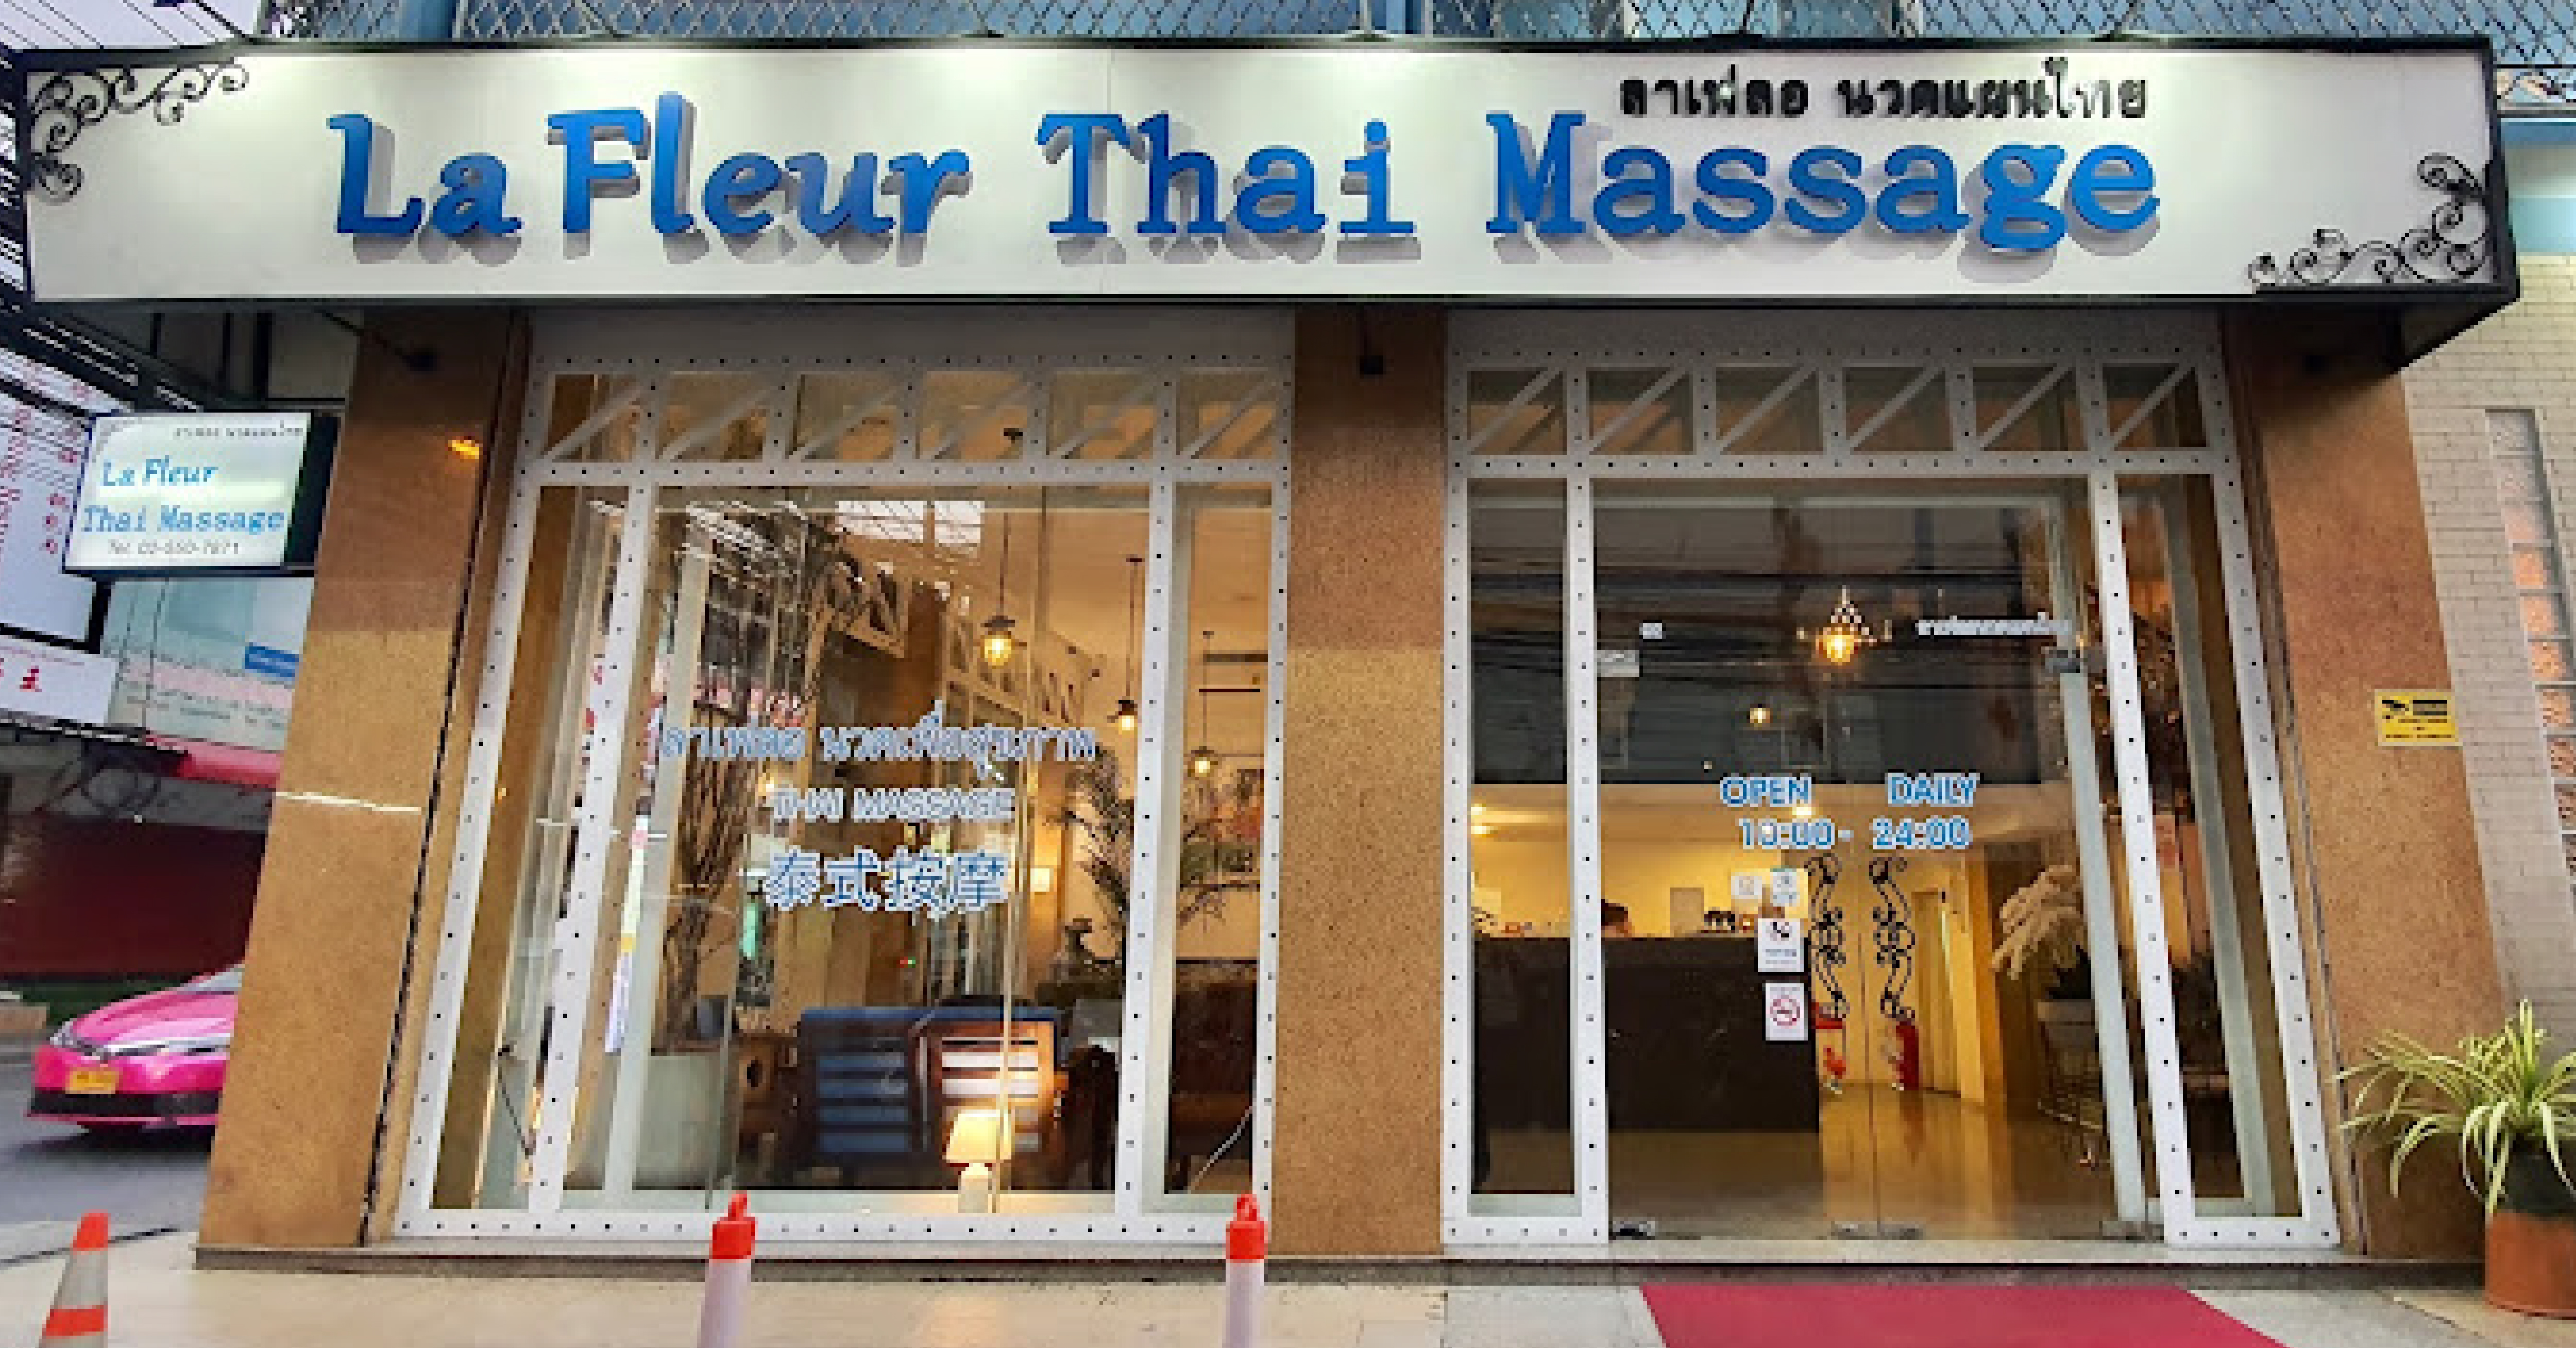 4. La Fleur Thai massage